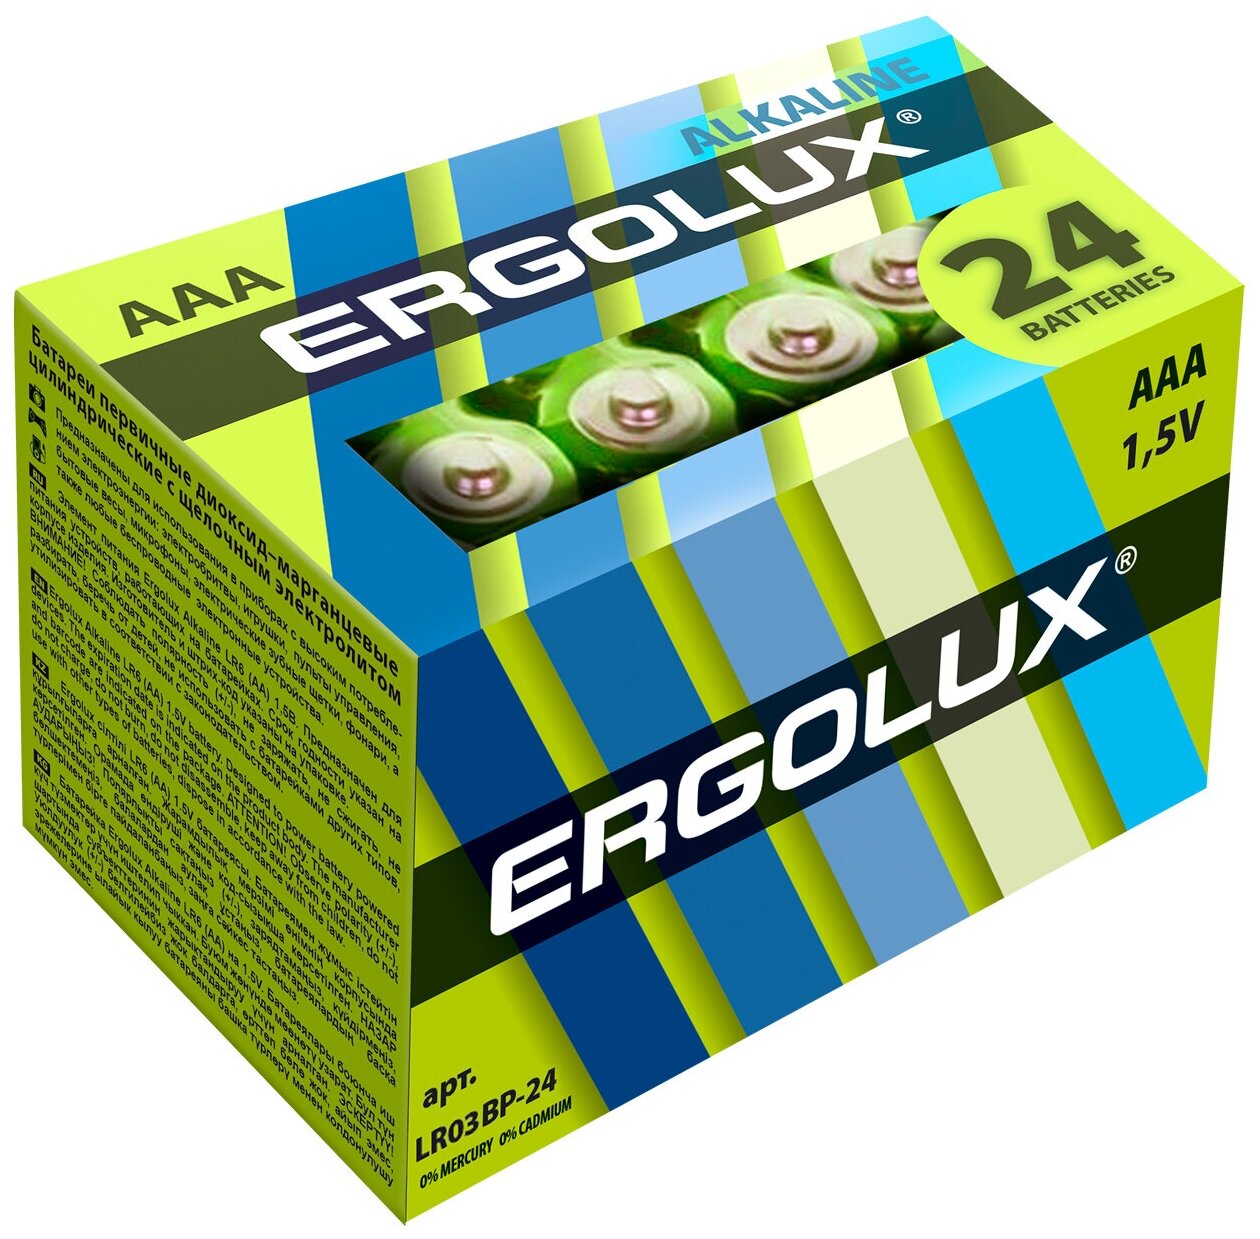 Батарейка алкалиновая Ergolux AAA LR03-24BOX (LR03 BP-24) 1.5В набор 24 шт.